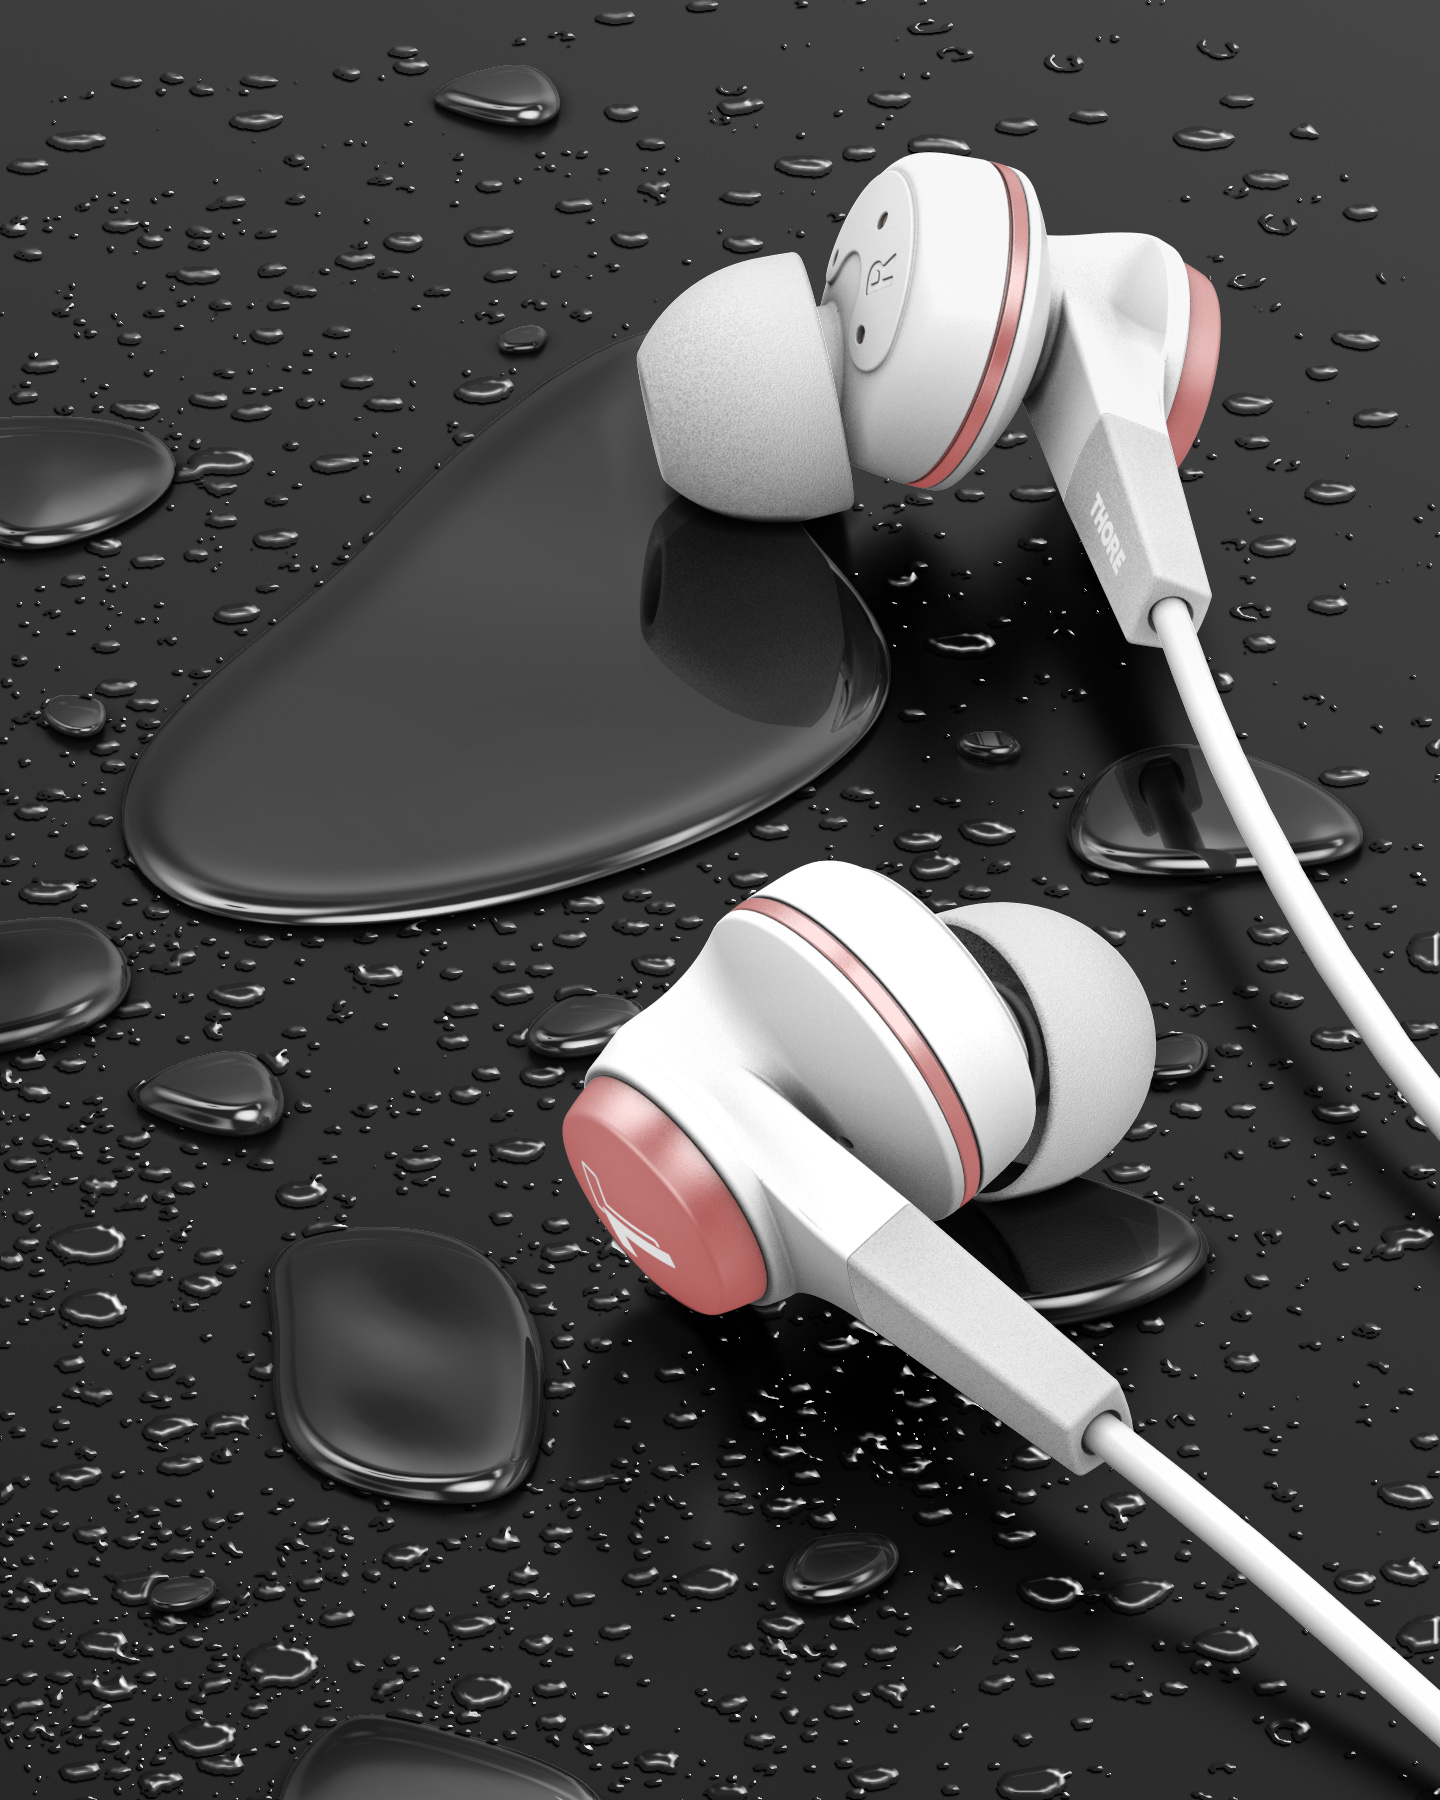 Wired Earphones For Iphone Headphone Apple Certified In Ear Lightning Earbuds Rose V120 Encased